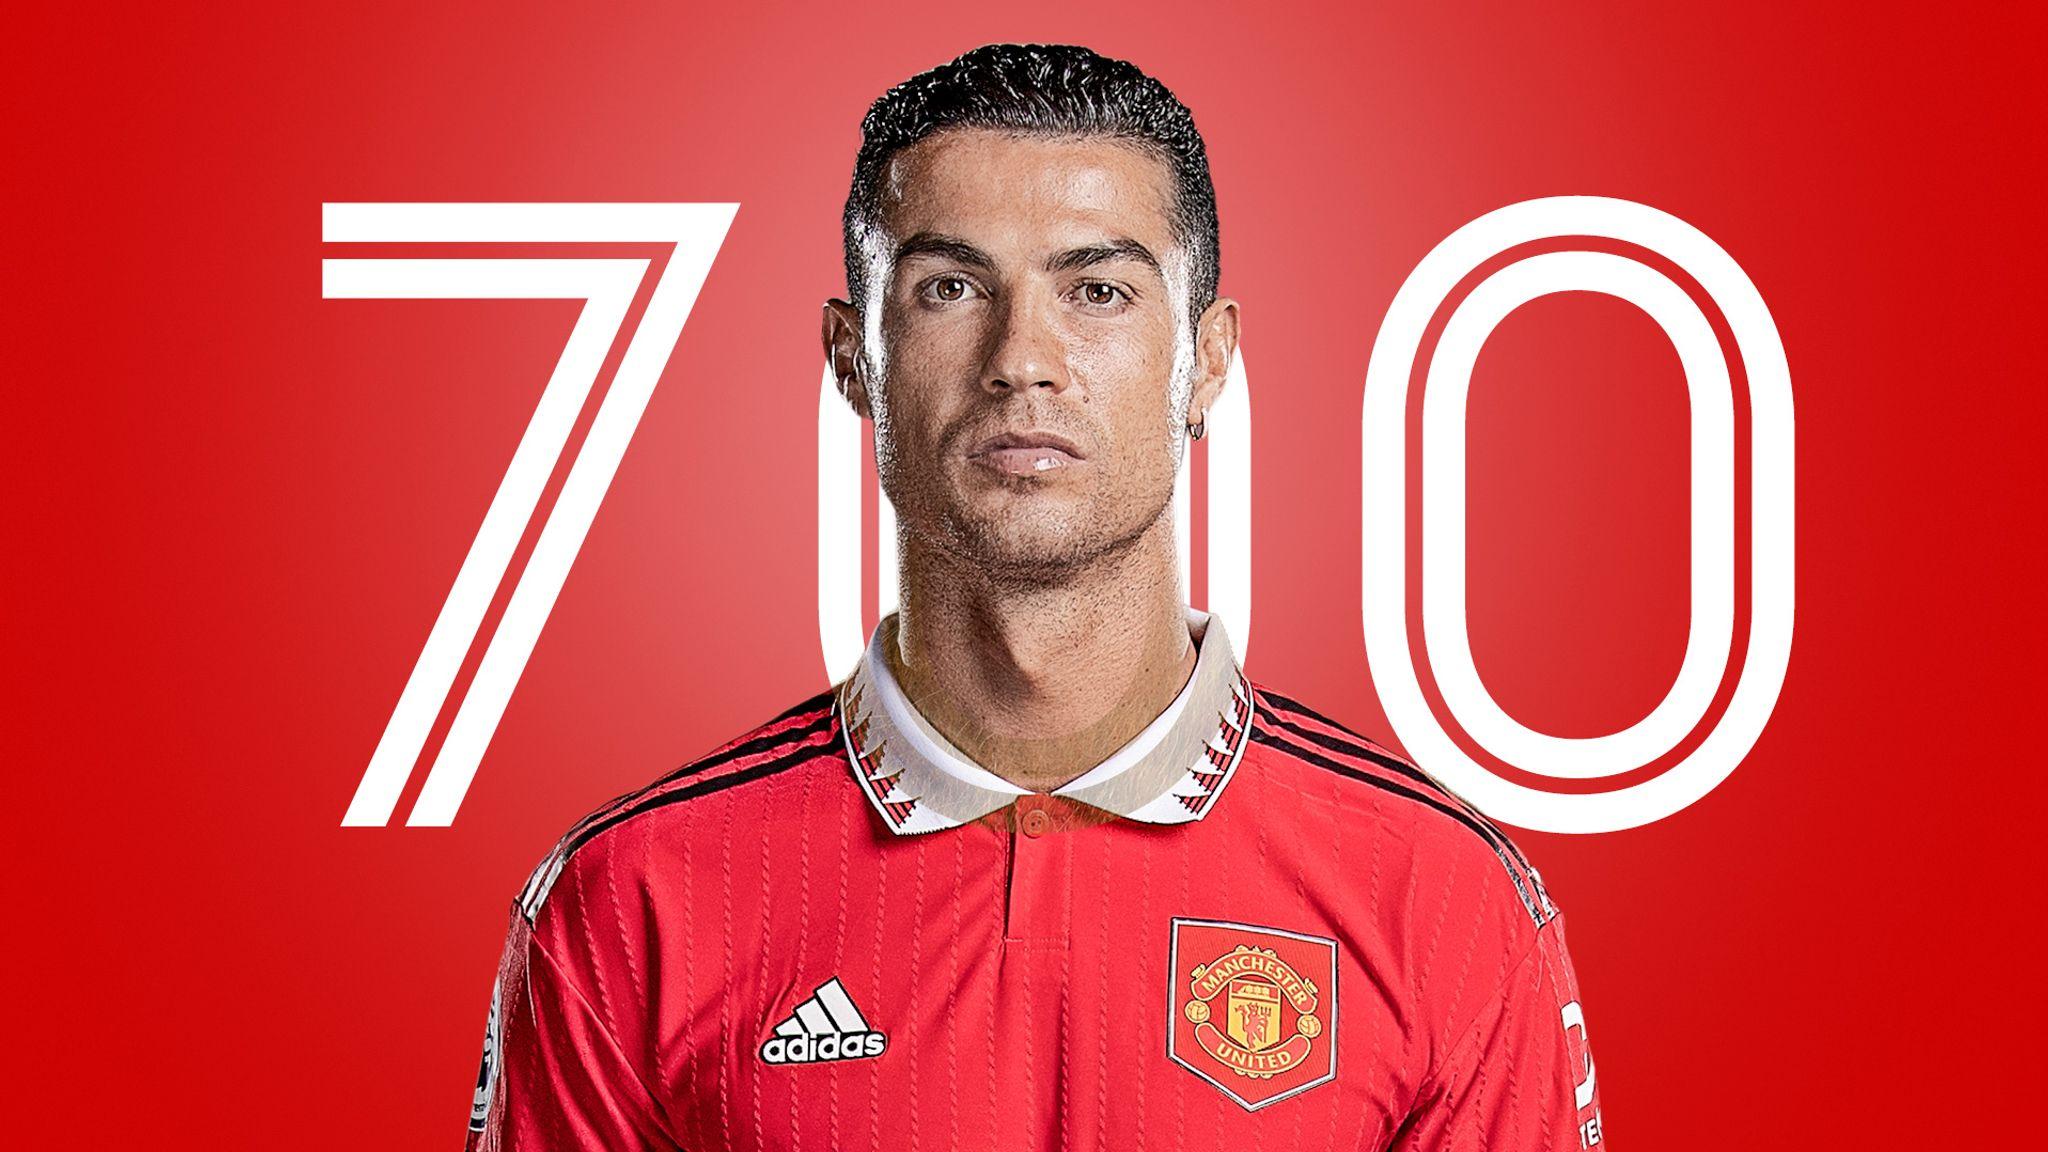 Cristiano Ronaldo reached record 700 club career goals_50.1